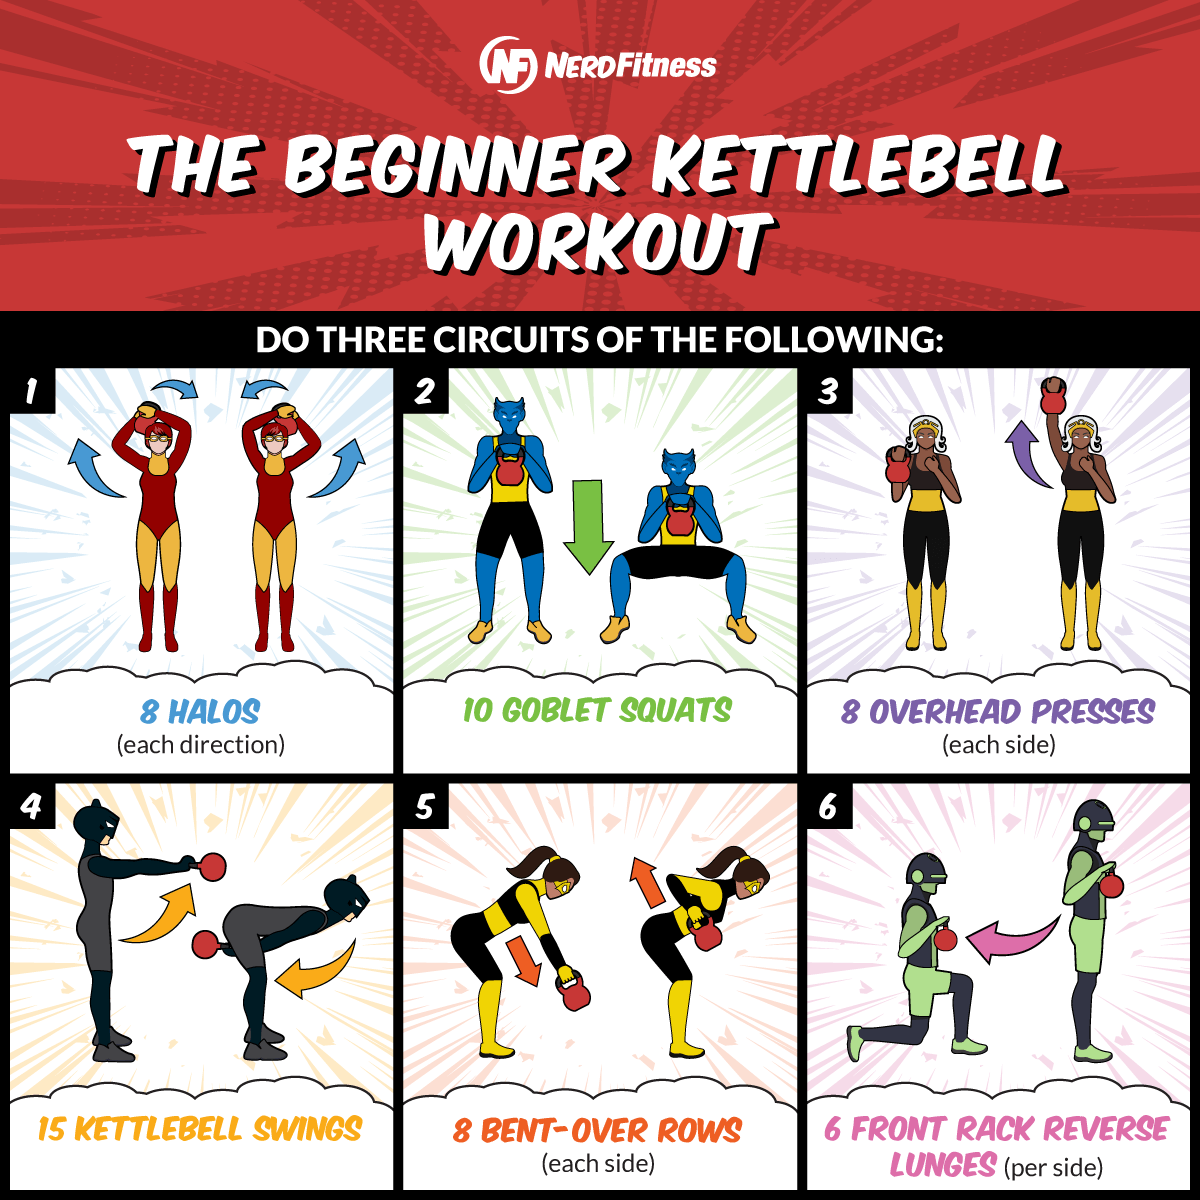 Tåre svindler Cafe The Kettlebell Workout (20-Minute Routine for Beginners) | Nerd Fitness